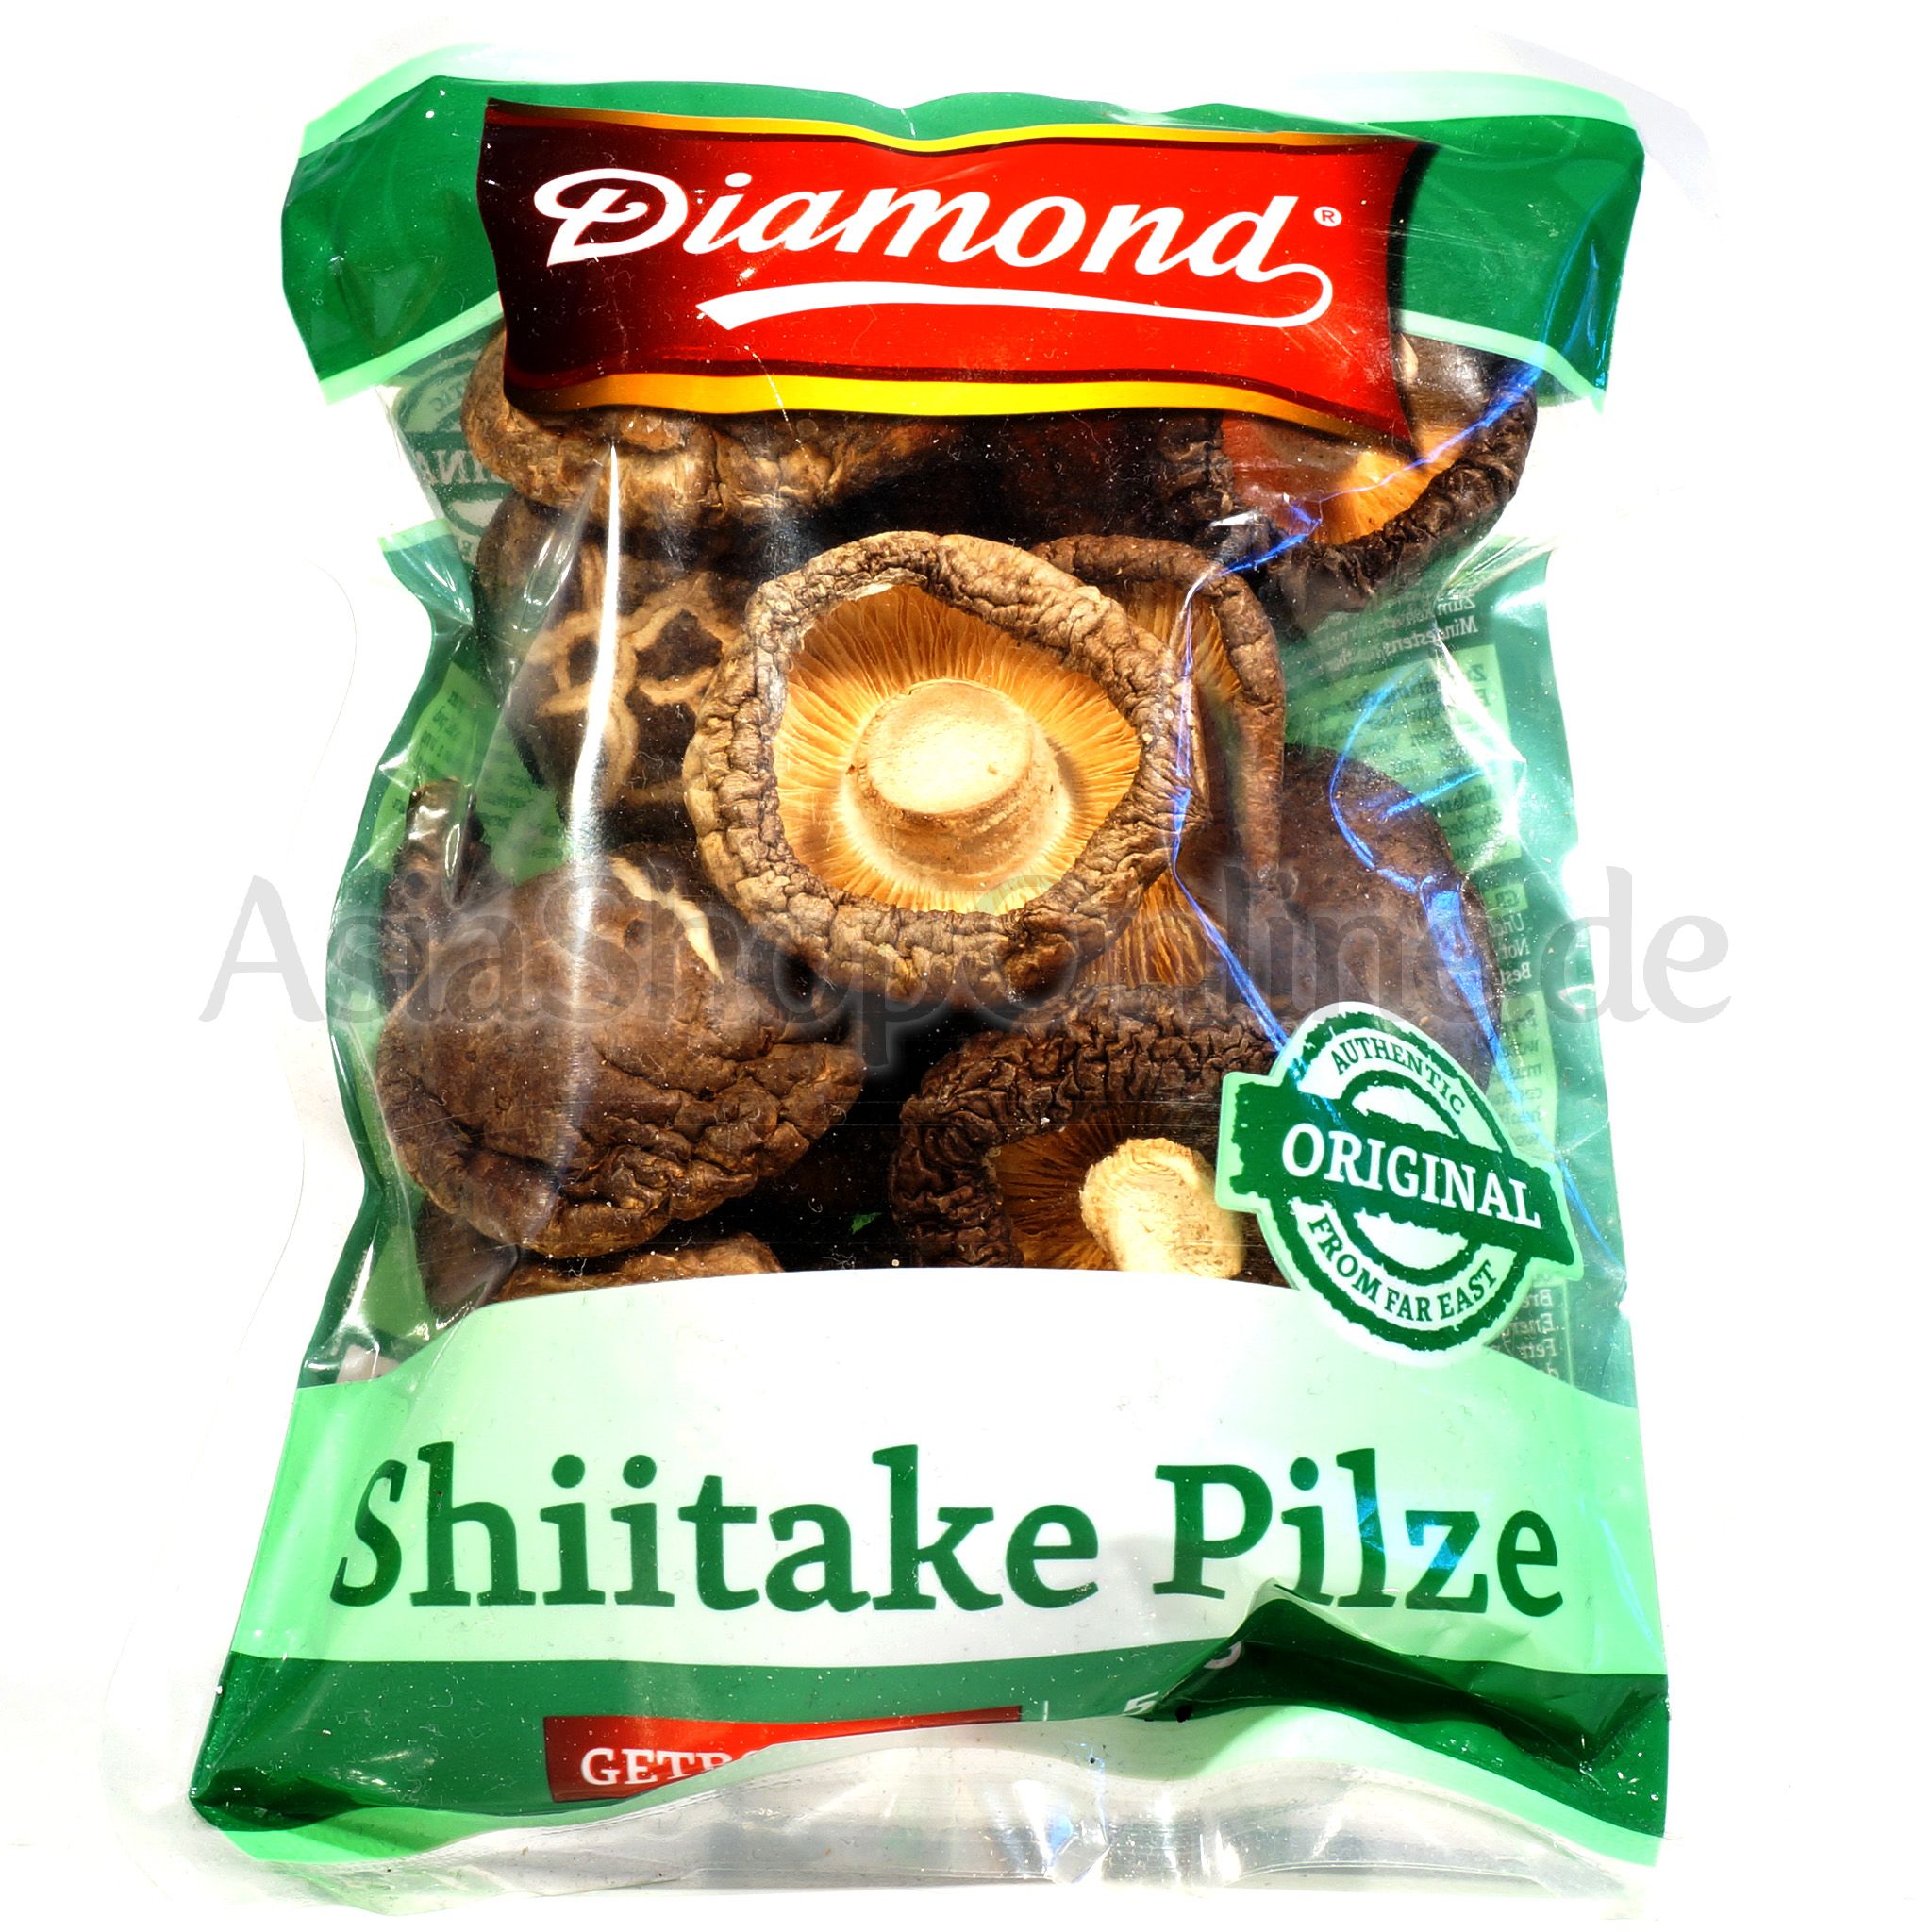 Shiitake Pilze - Diamond - 50g